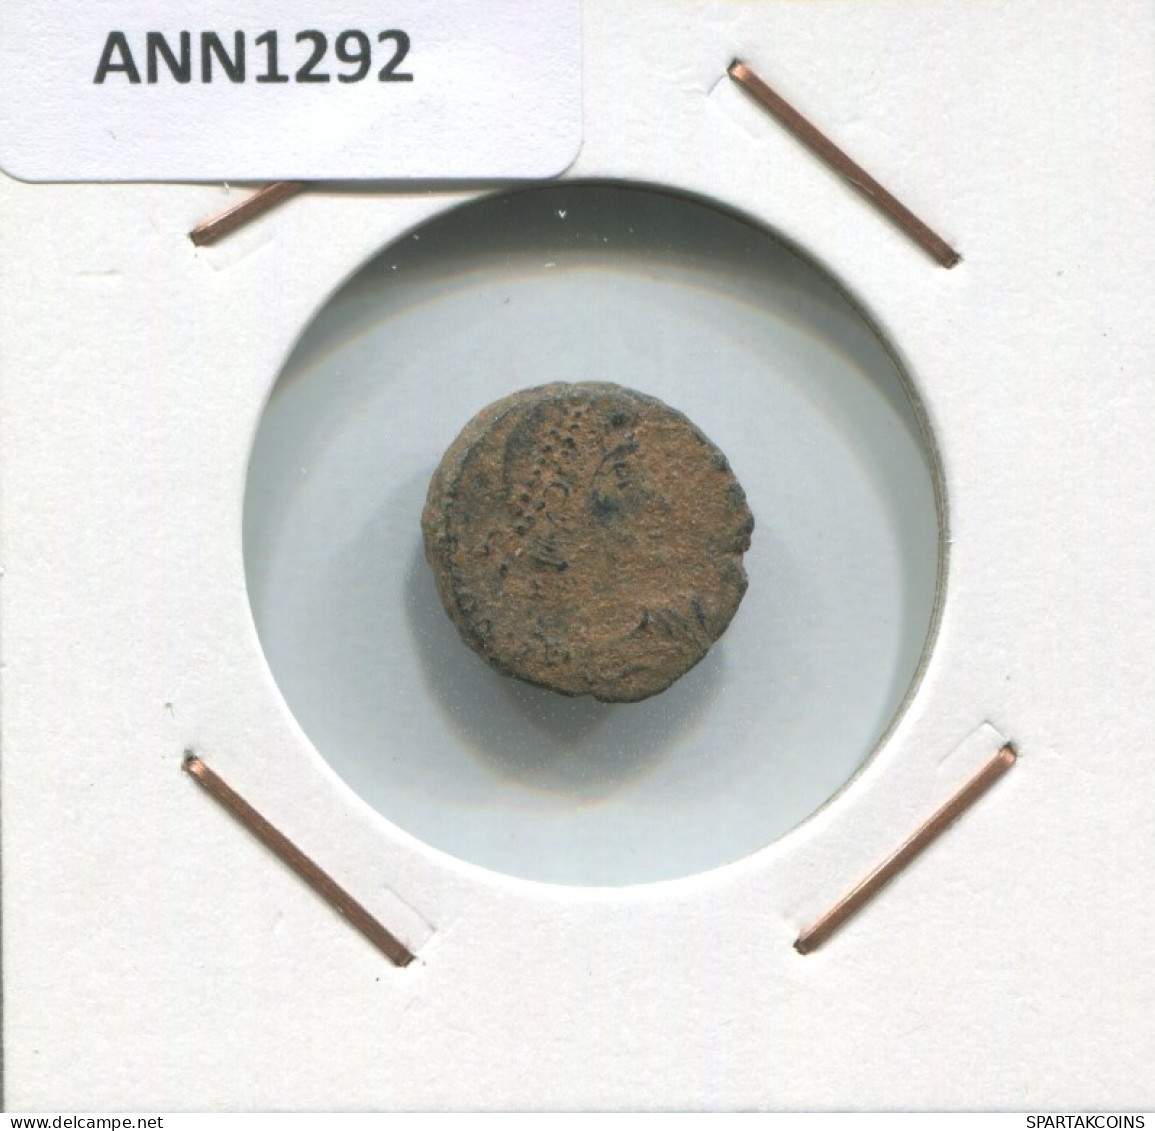 CONSTANTIUS II SISCIA SMAN AD324-337 GLORIA EXERCITVS 1.9g/14mm #ANN1292.9.U.A - El Imperio Christiano (307 / 363)